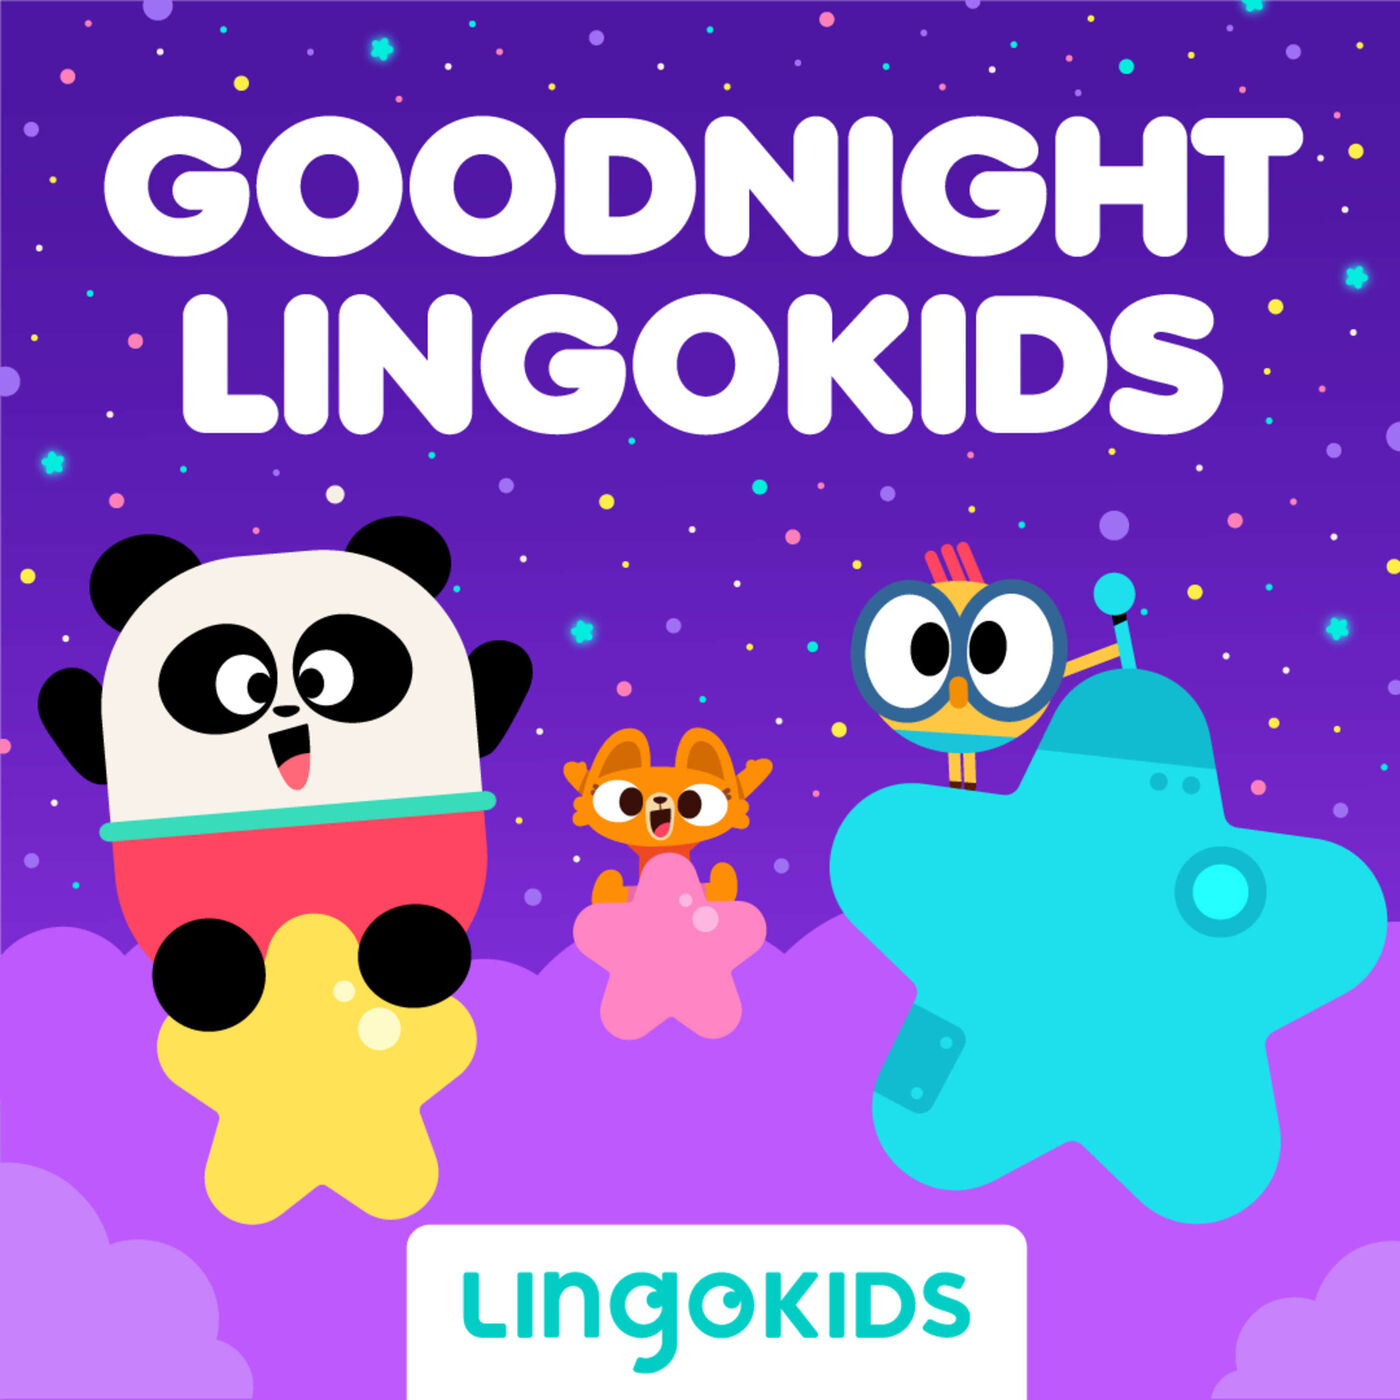 Goodnight, Lingokids: Twinkling stars